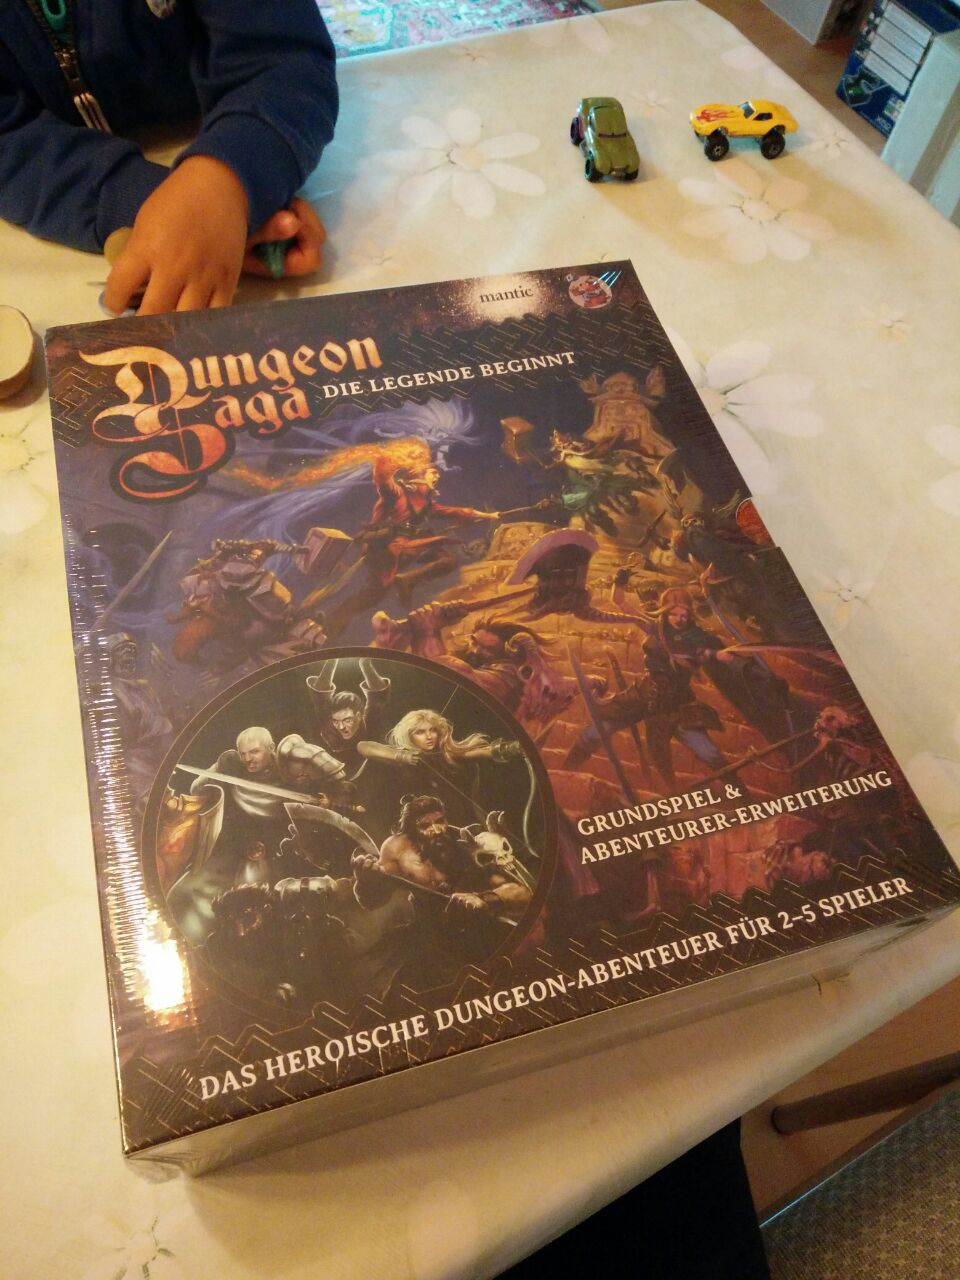 Dungeon Saga